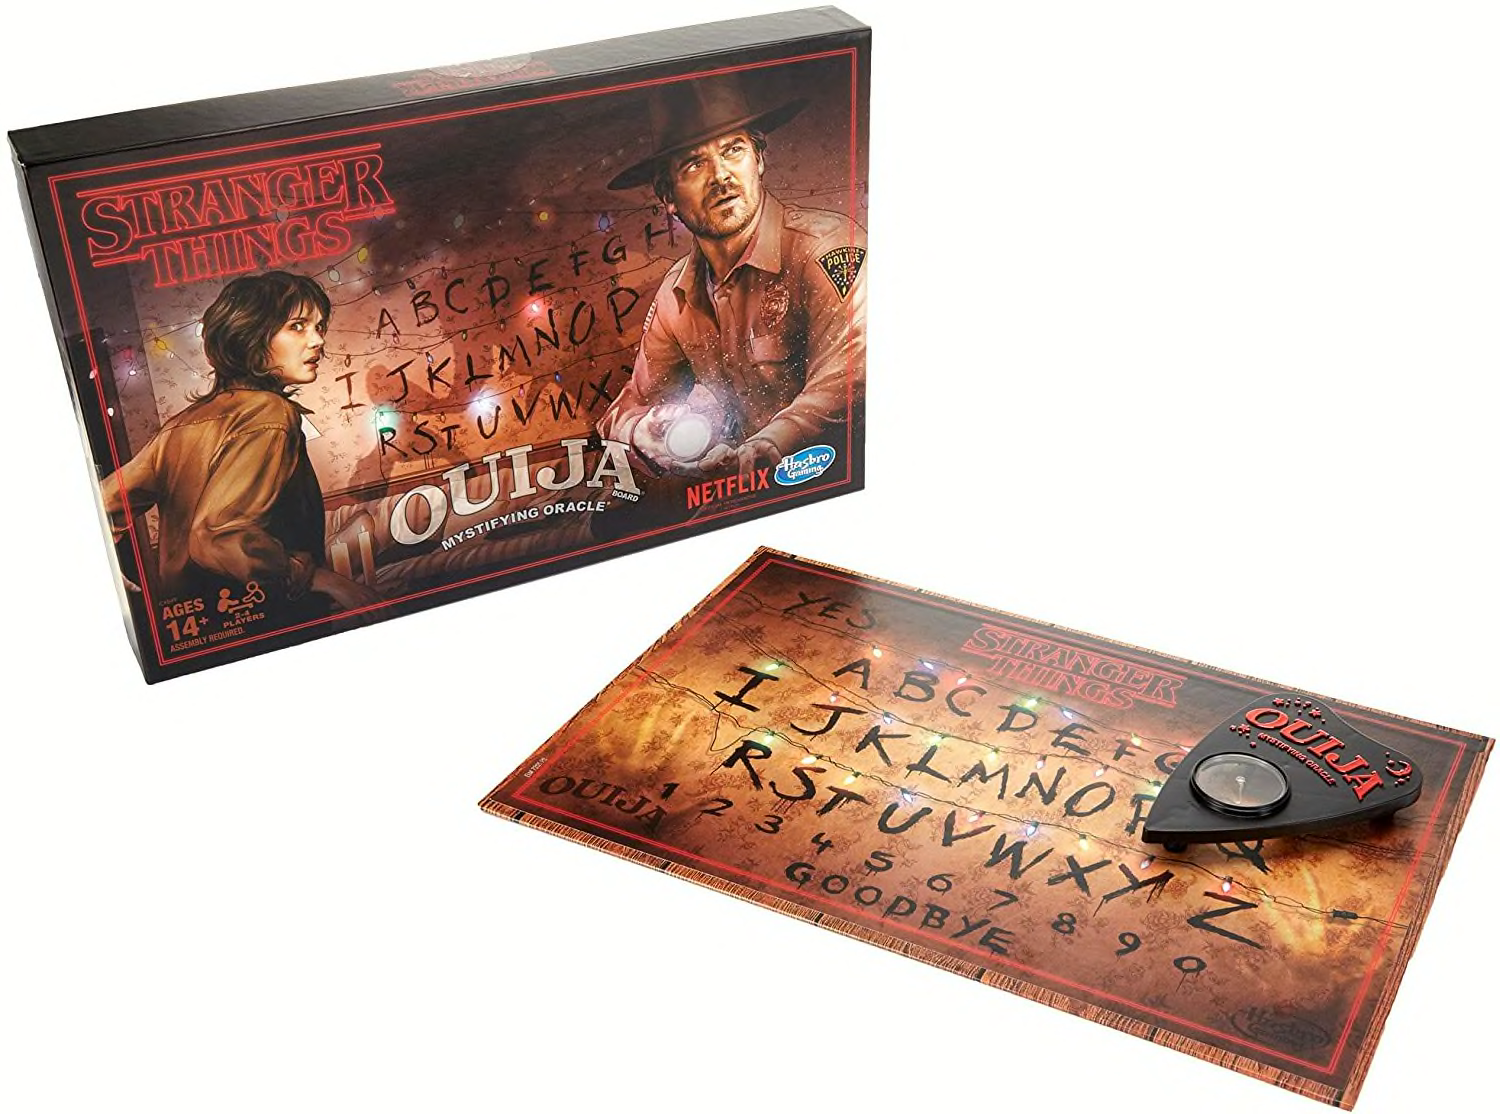 Echa un vistazo al tablero Stranger Things Ouija de Hasbro en Amazon.